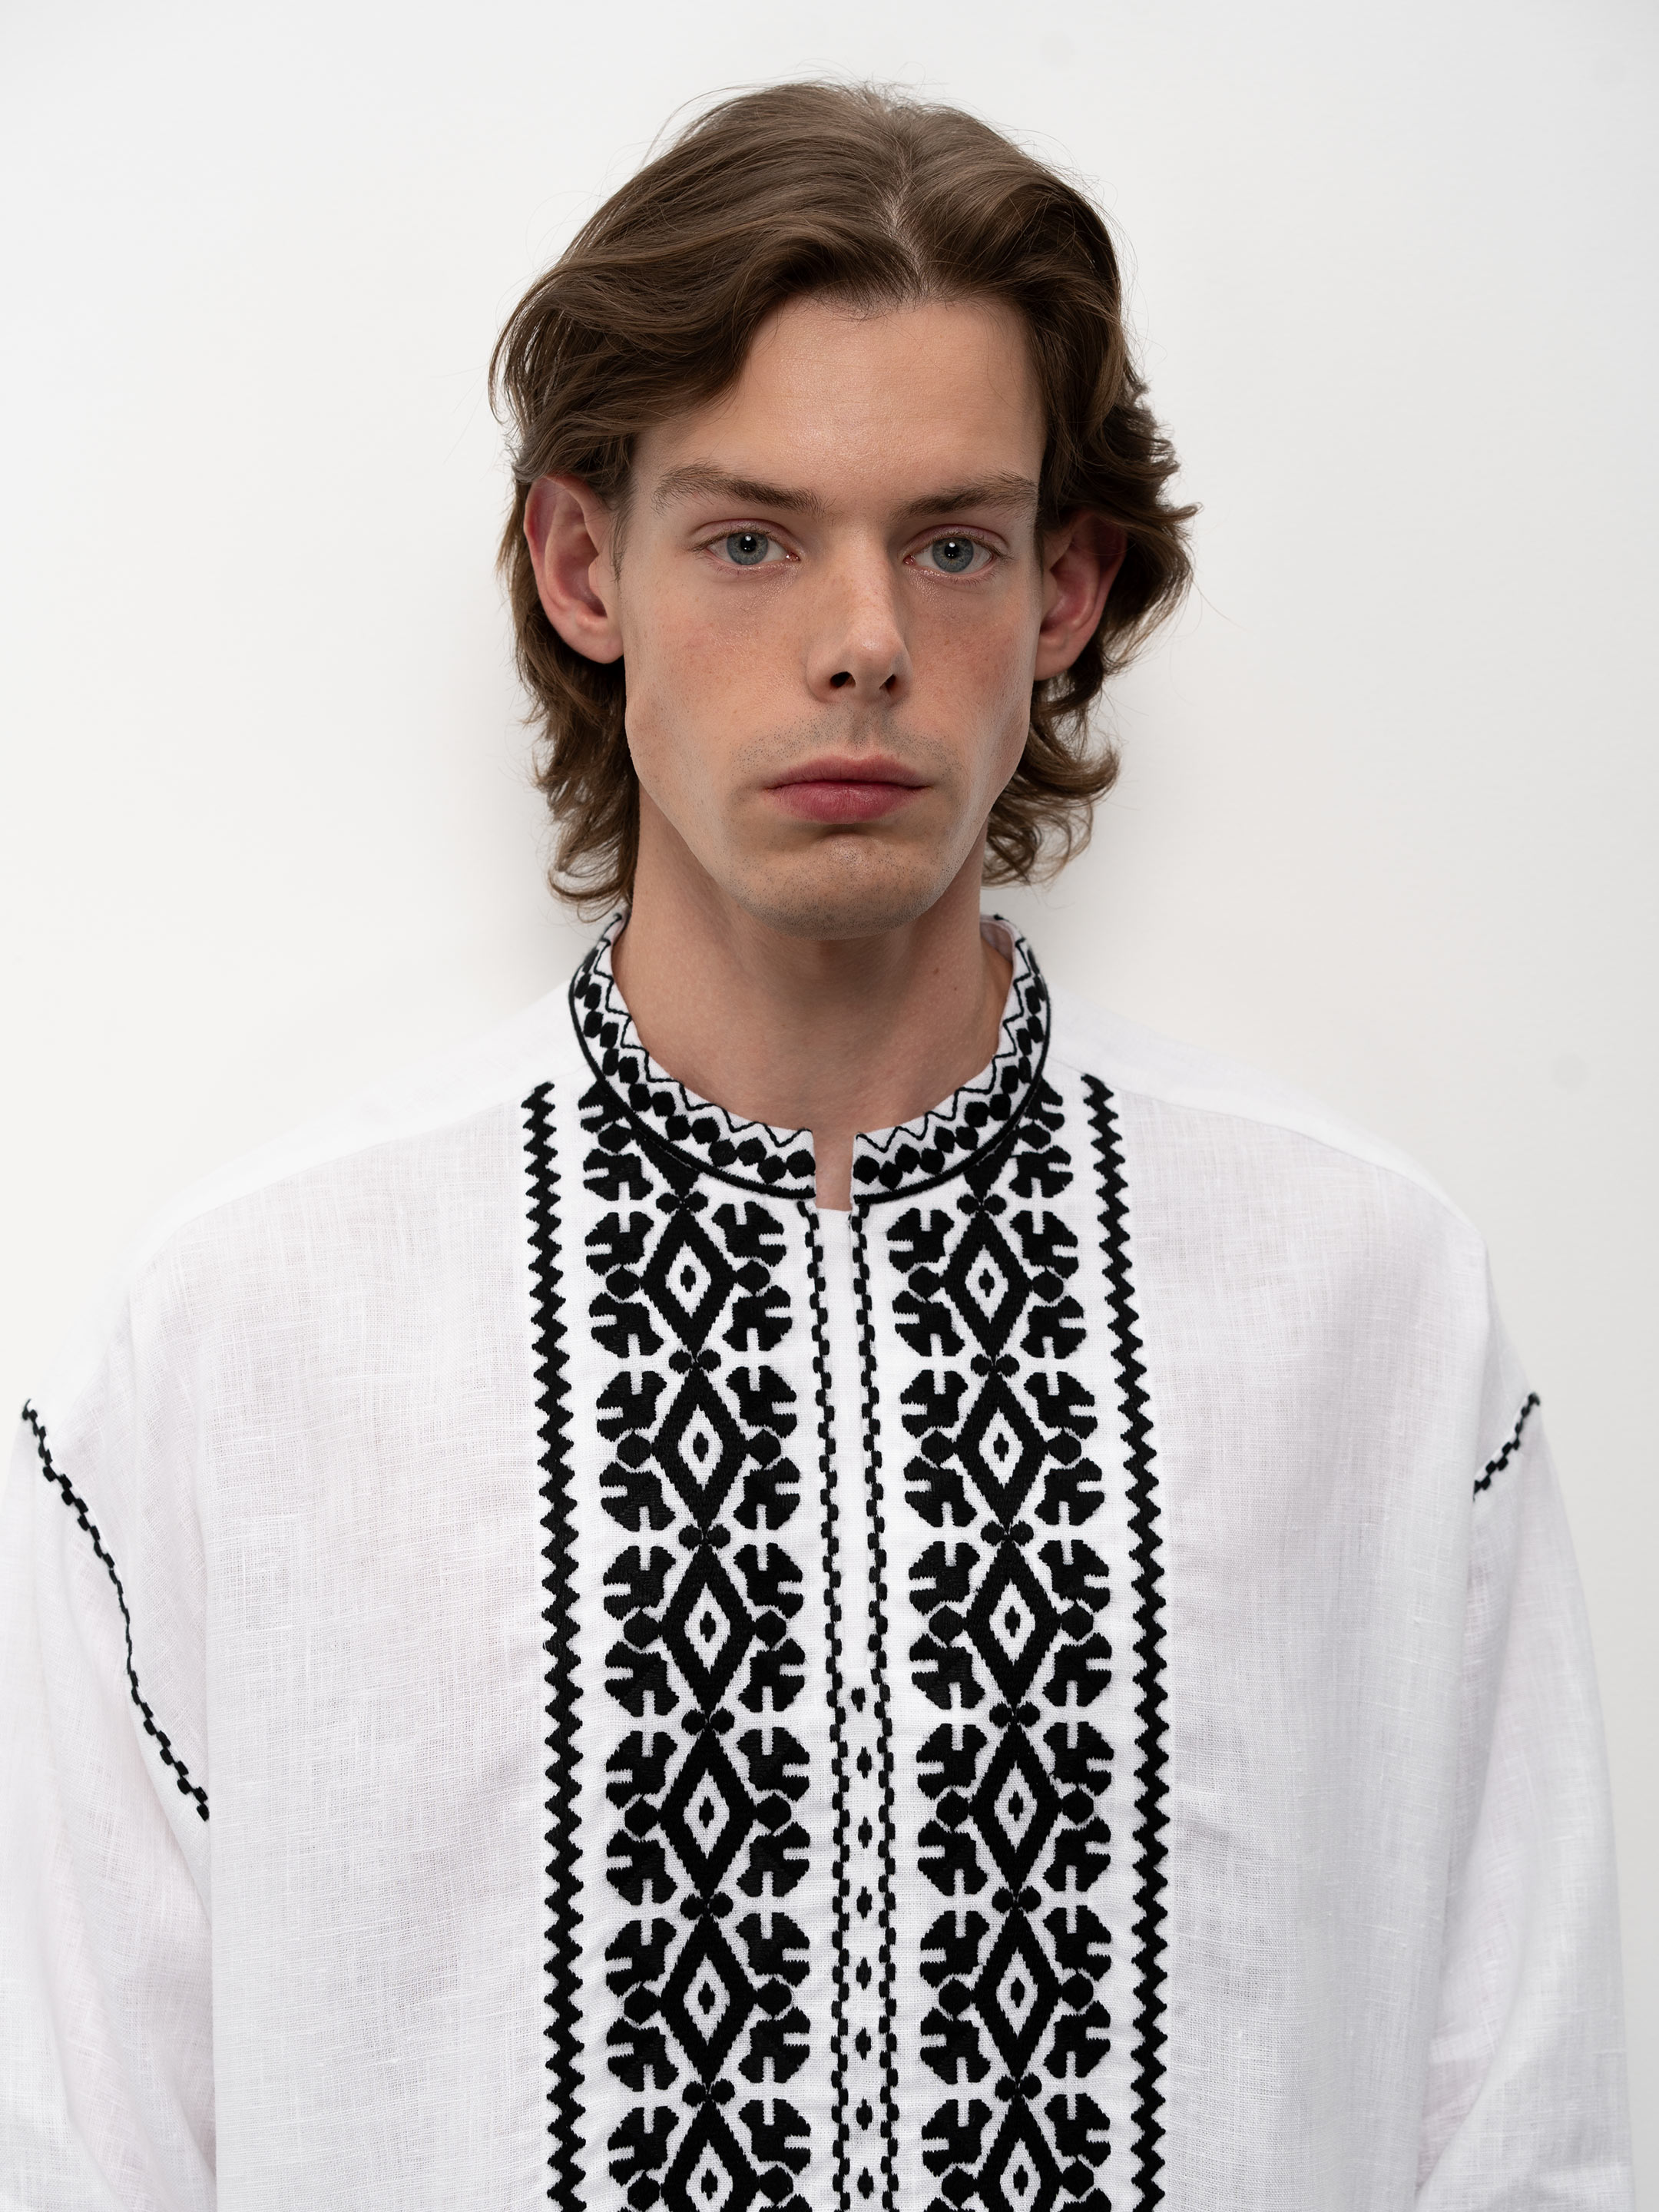 Men's embroidered shirt with collar Veremiy buy in Kyiv, price — Etnodim